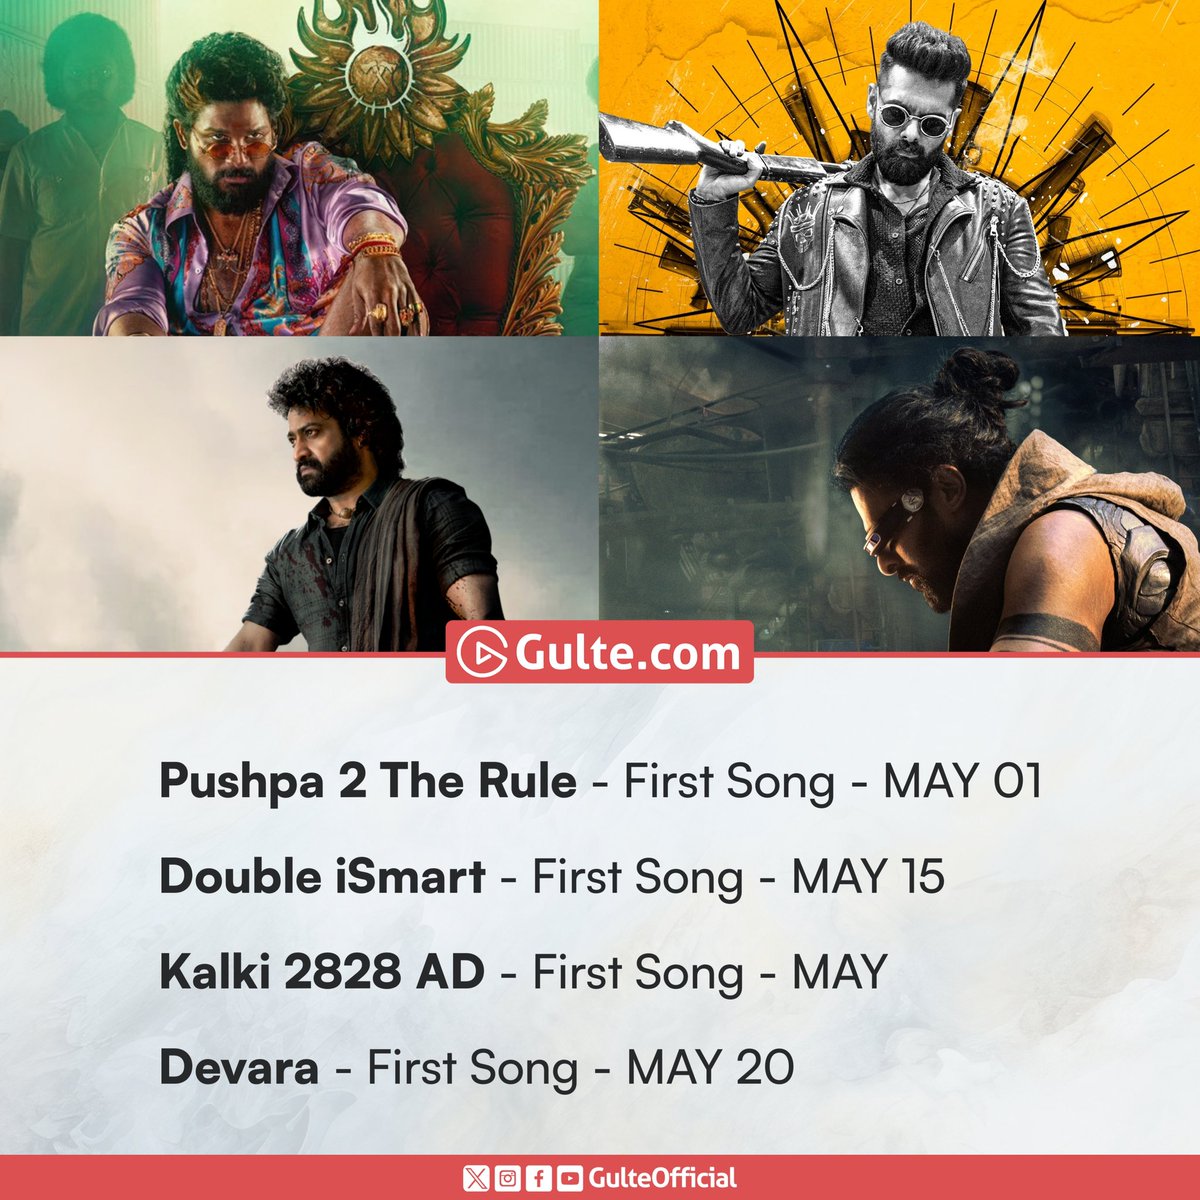 MAY - The Month Of FIRST SINGLES!

#Pushpa2TheRule #DoubleiSmart
#Kalki2828AD #Devara